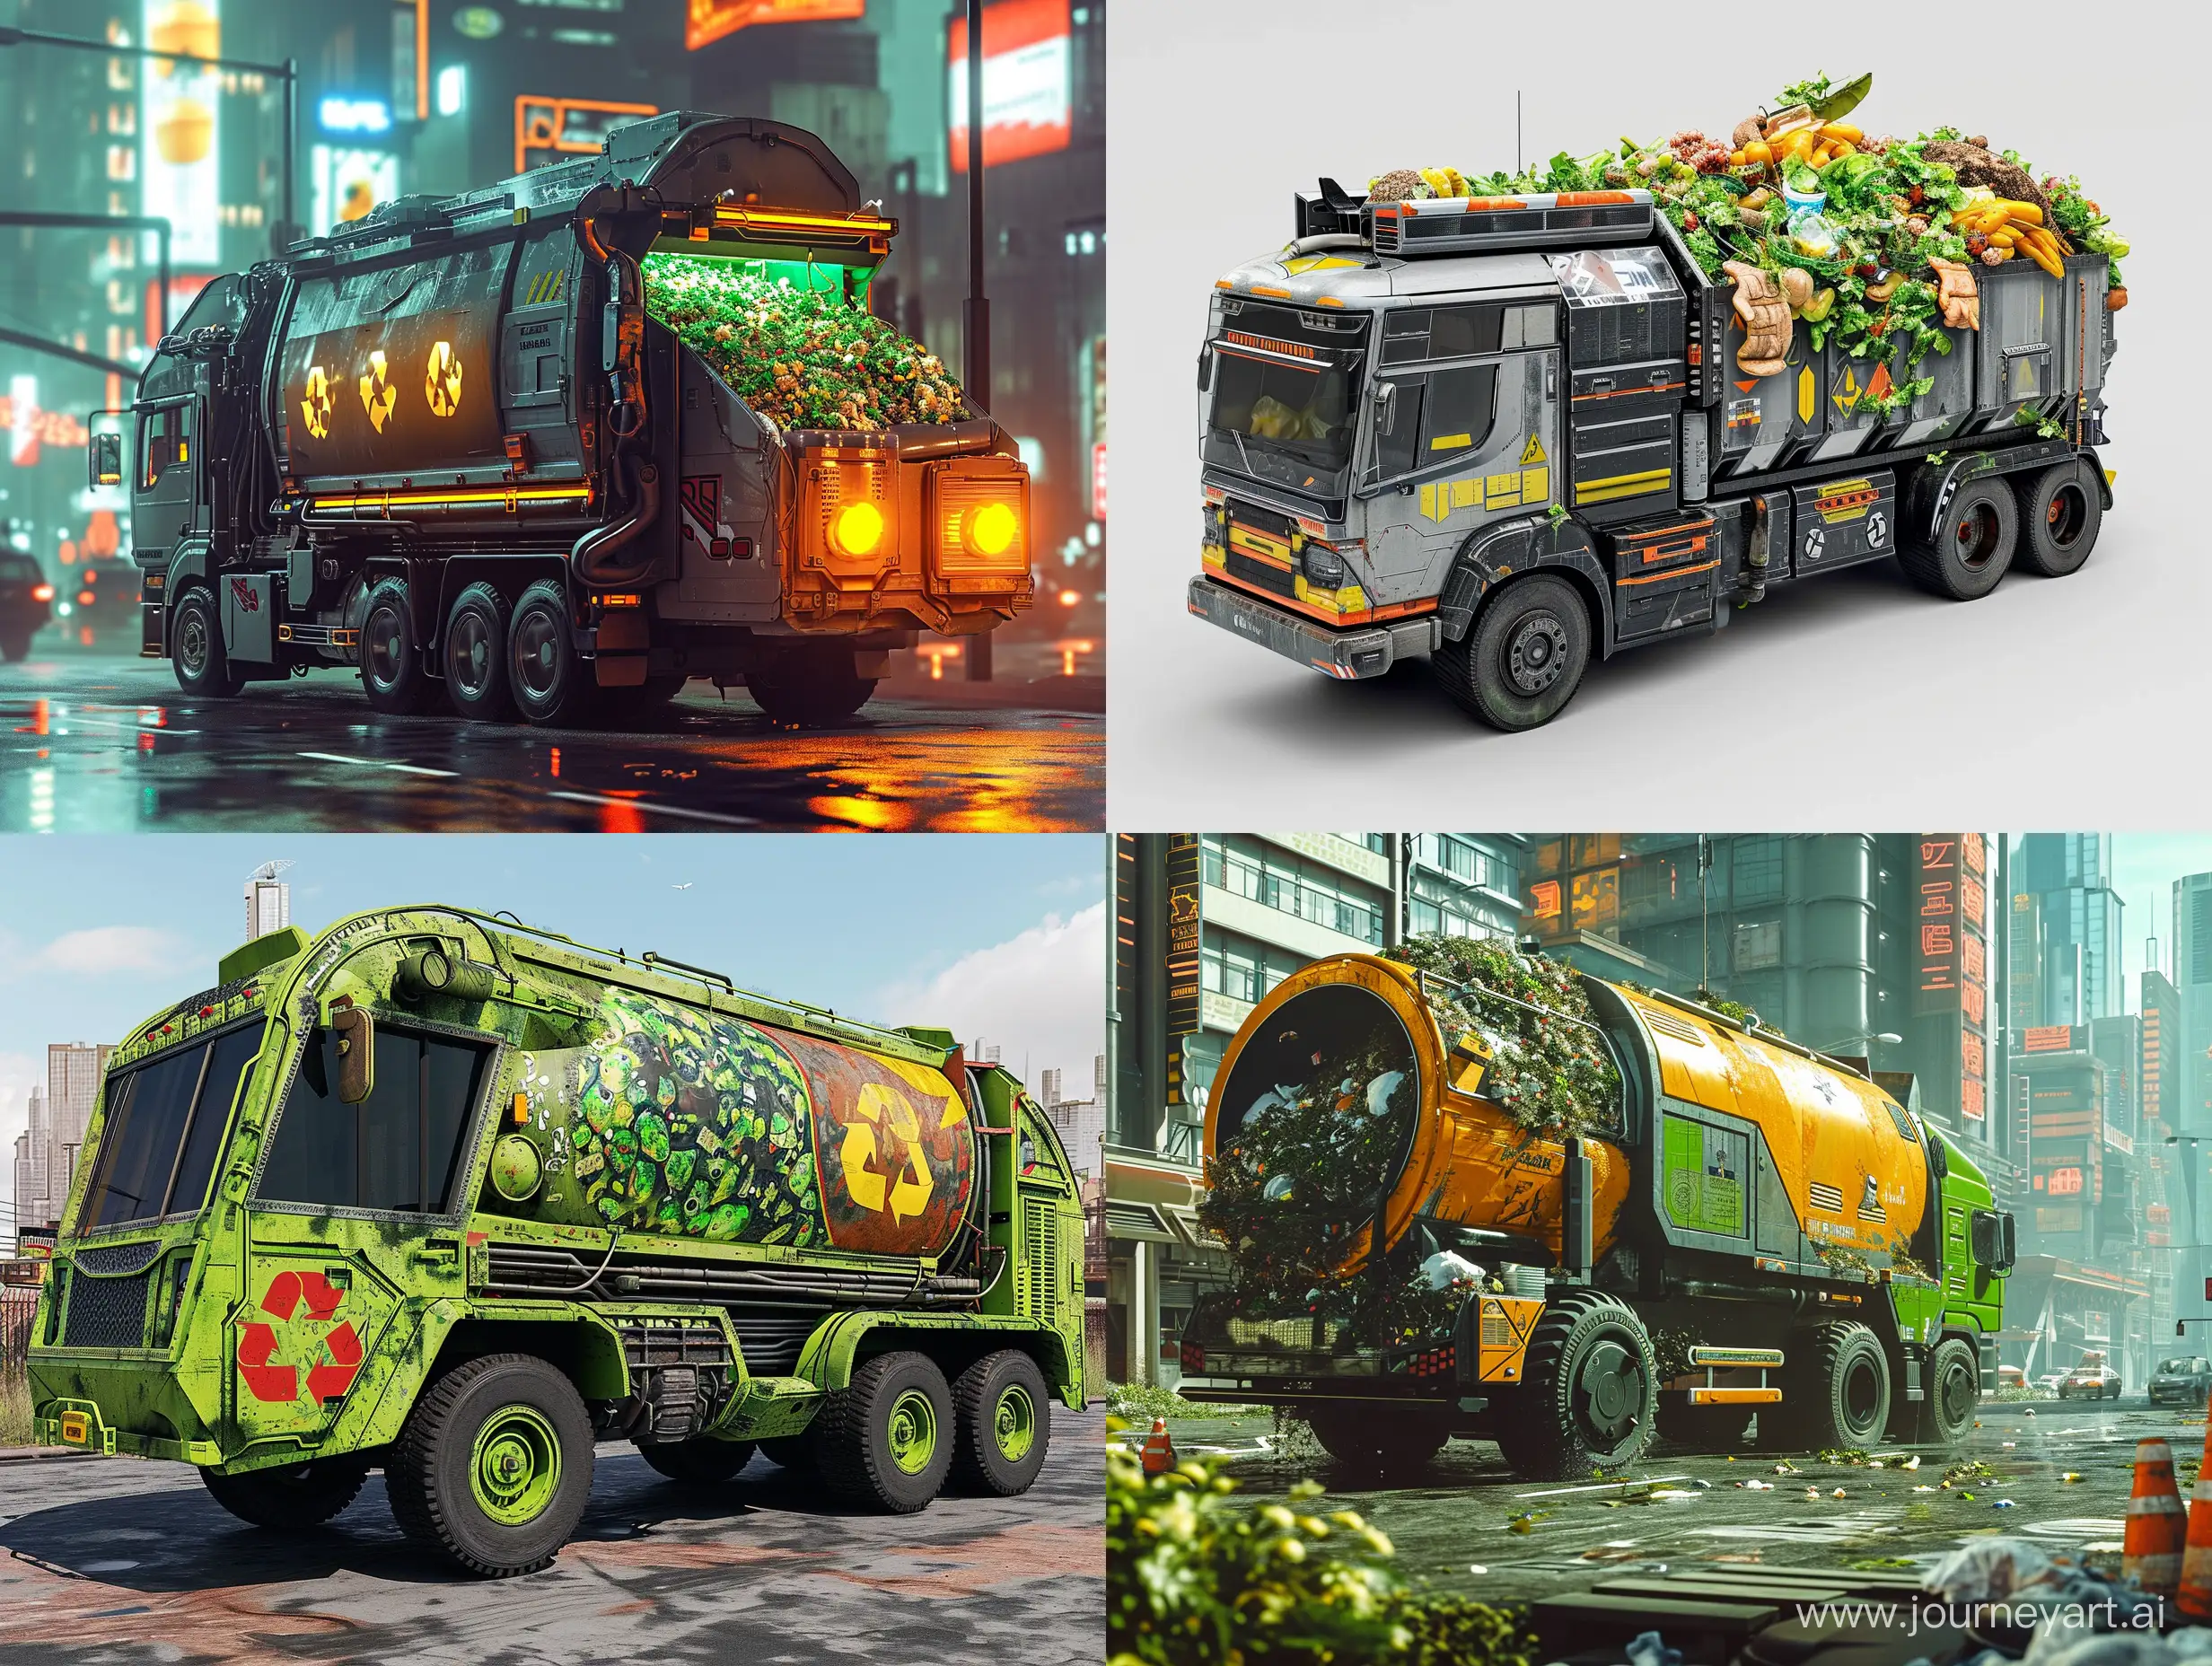 Futuristic-Cyberpunk-City-Food-Waste-Recycling-Truck